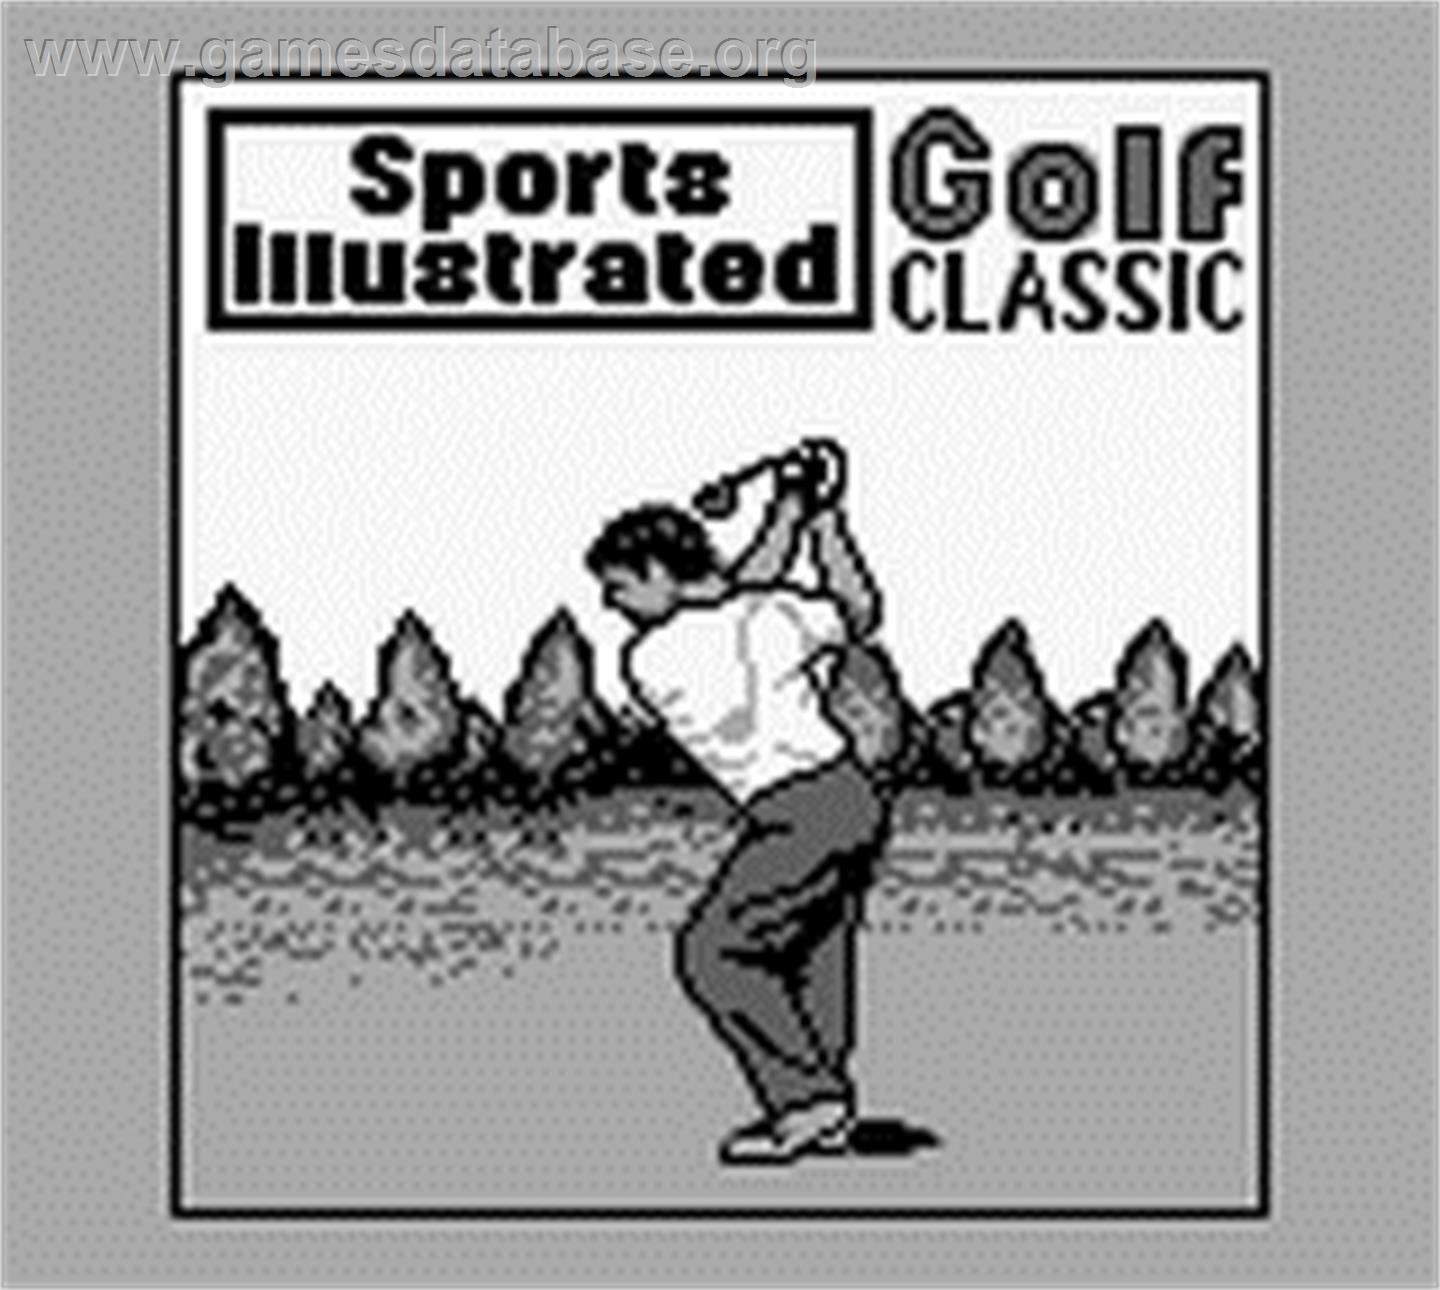 Sports Illustrated - Golf Classic - Nintendo Game Boy - Artwork - Title Screen